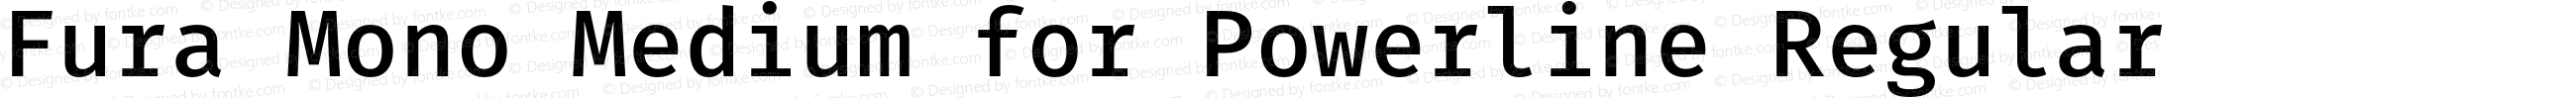 Fura Mono Medium for Powerline Nerd Font Plus Octicons Plus Pomicons